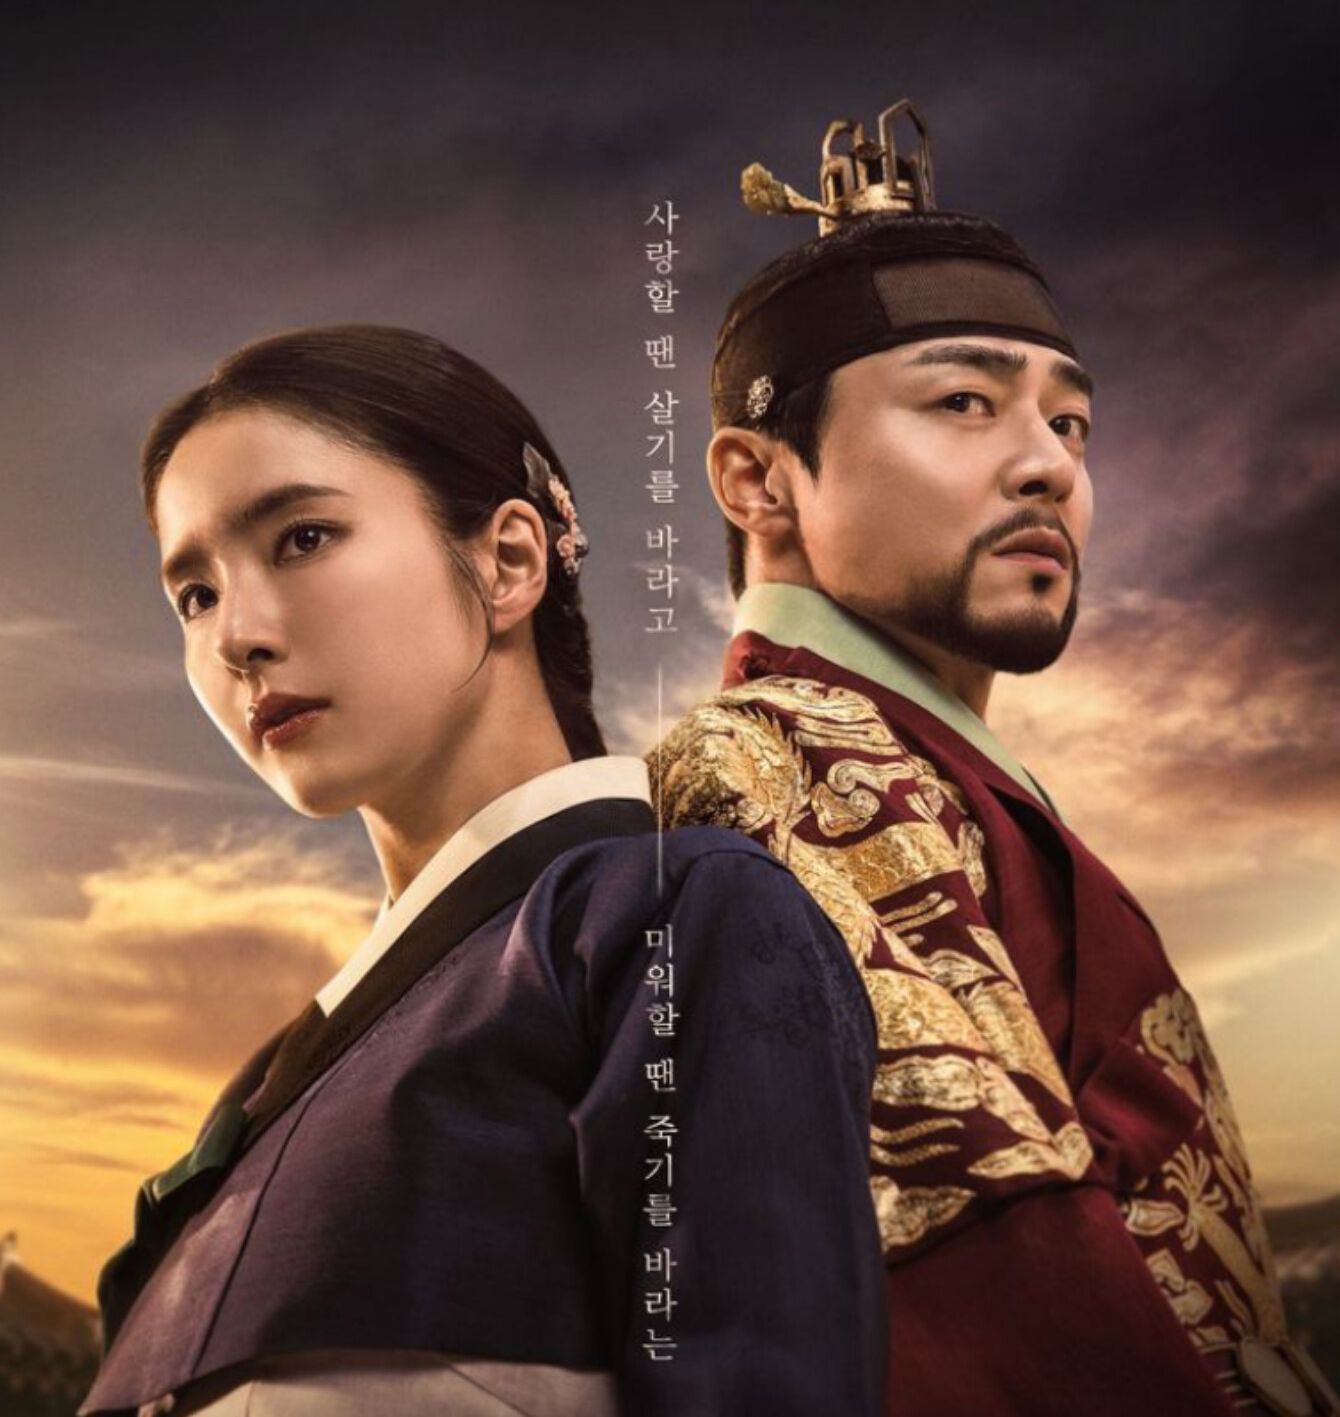 Captivating the King K-drama Poster 